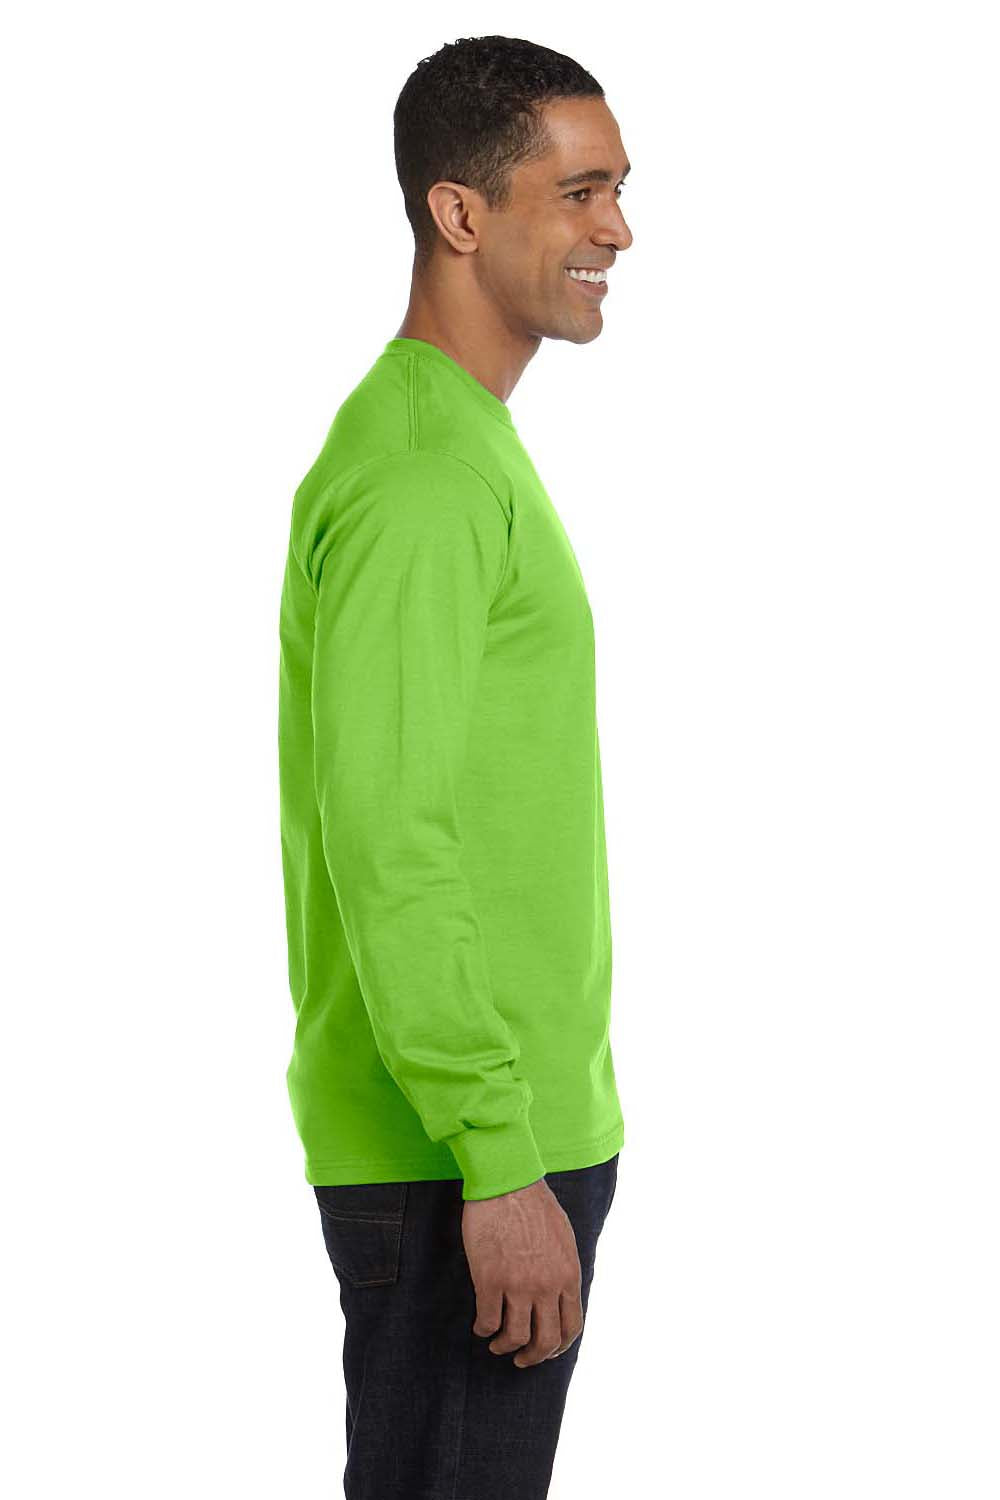 Hanes 5186 Mens Beefy-T Long Sleeve Crewneck T-Shirt Lime Green Side